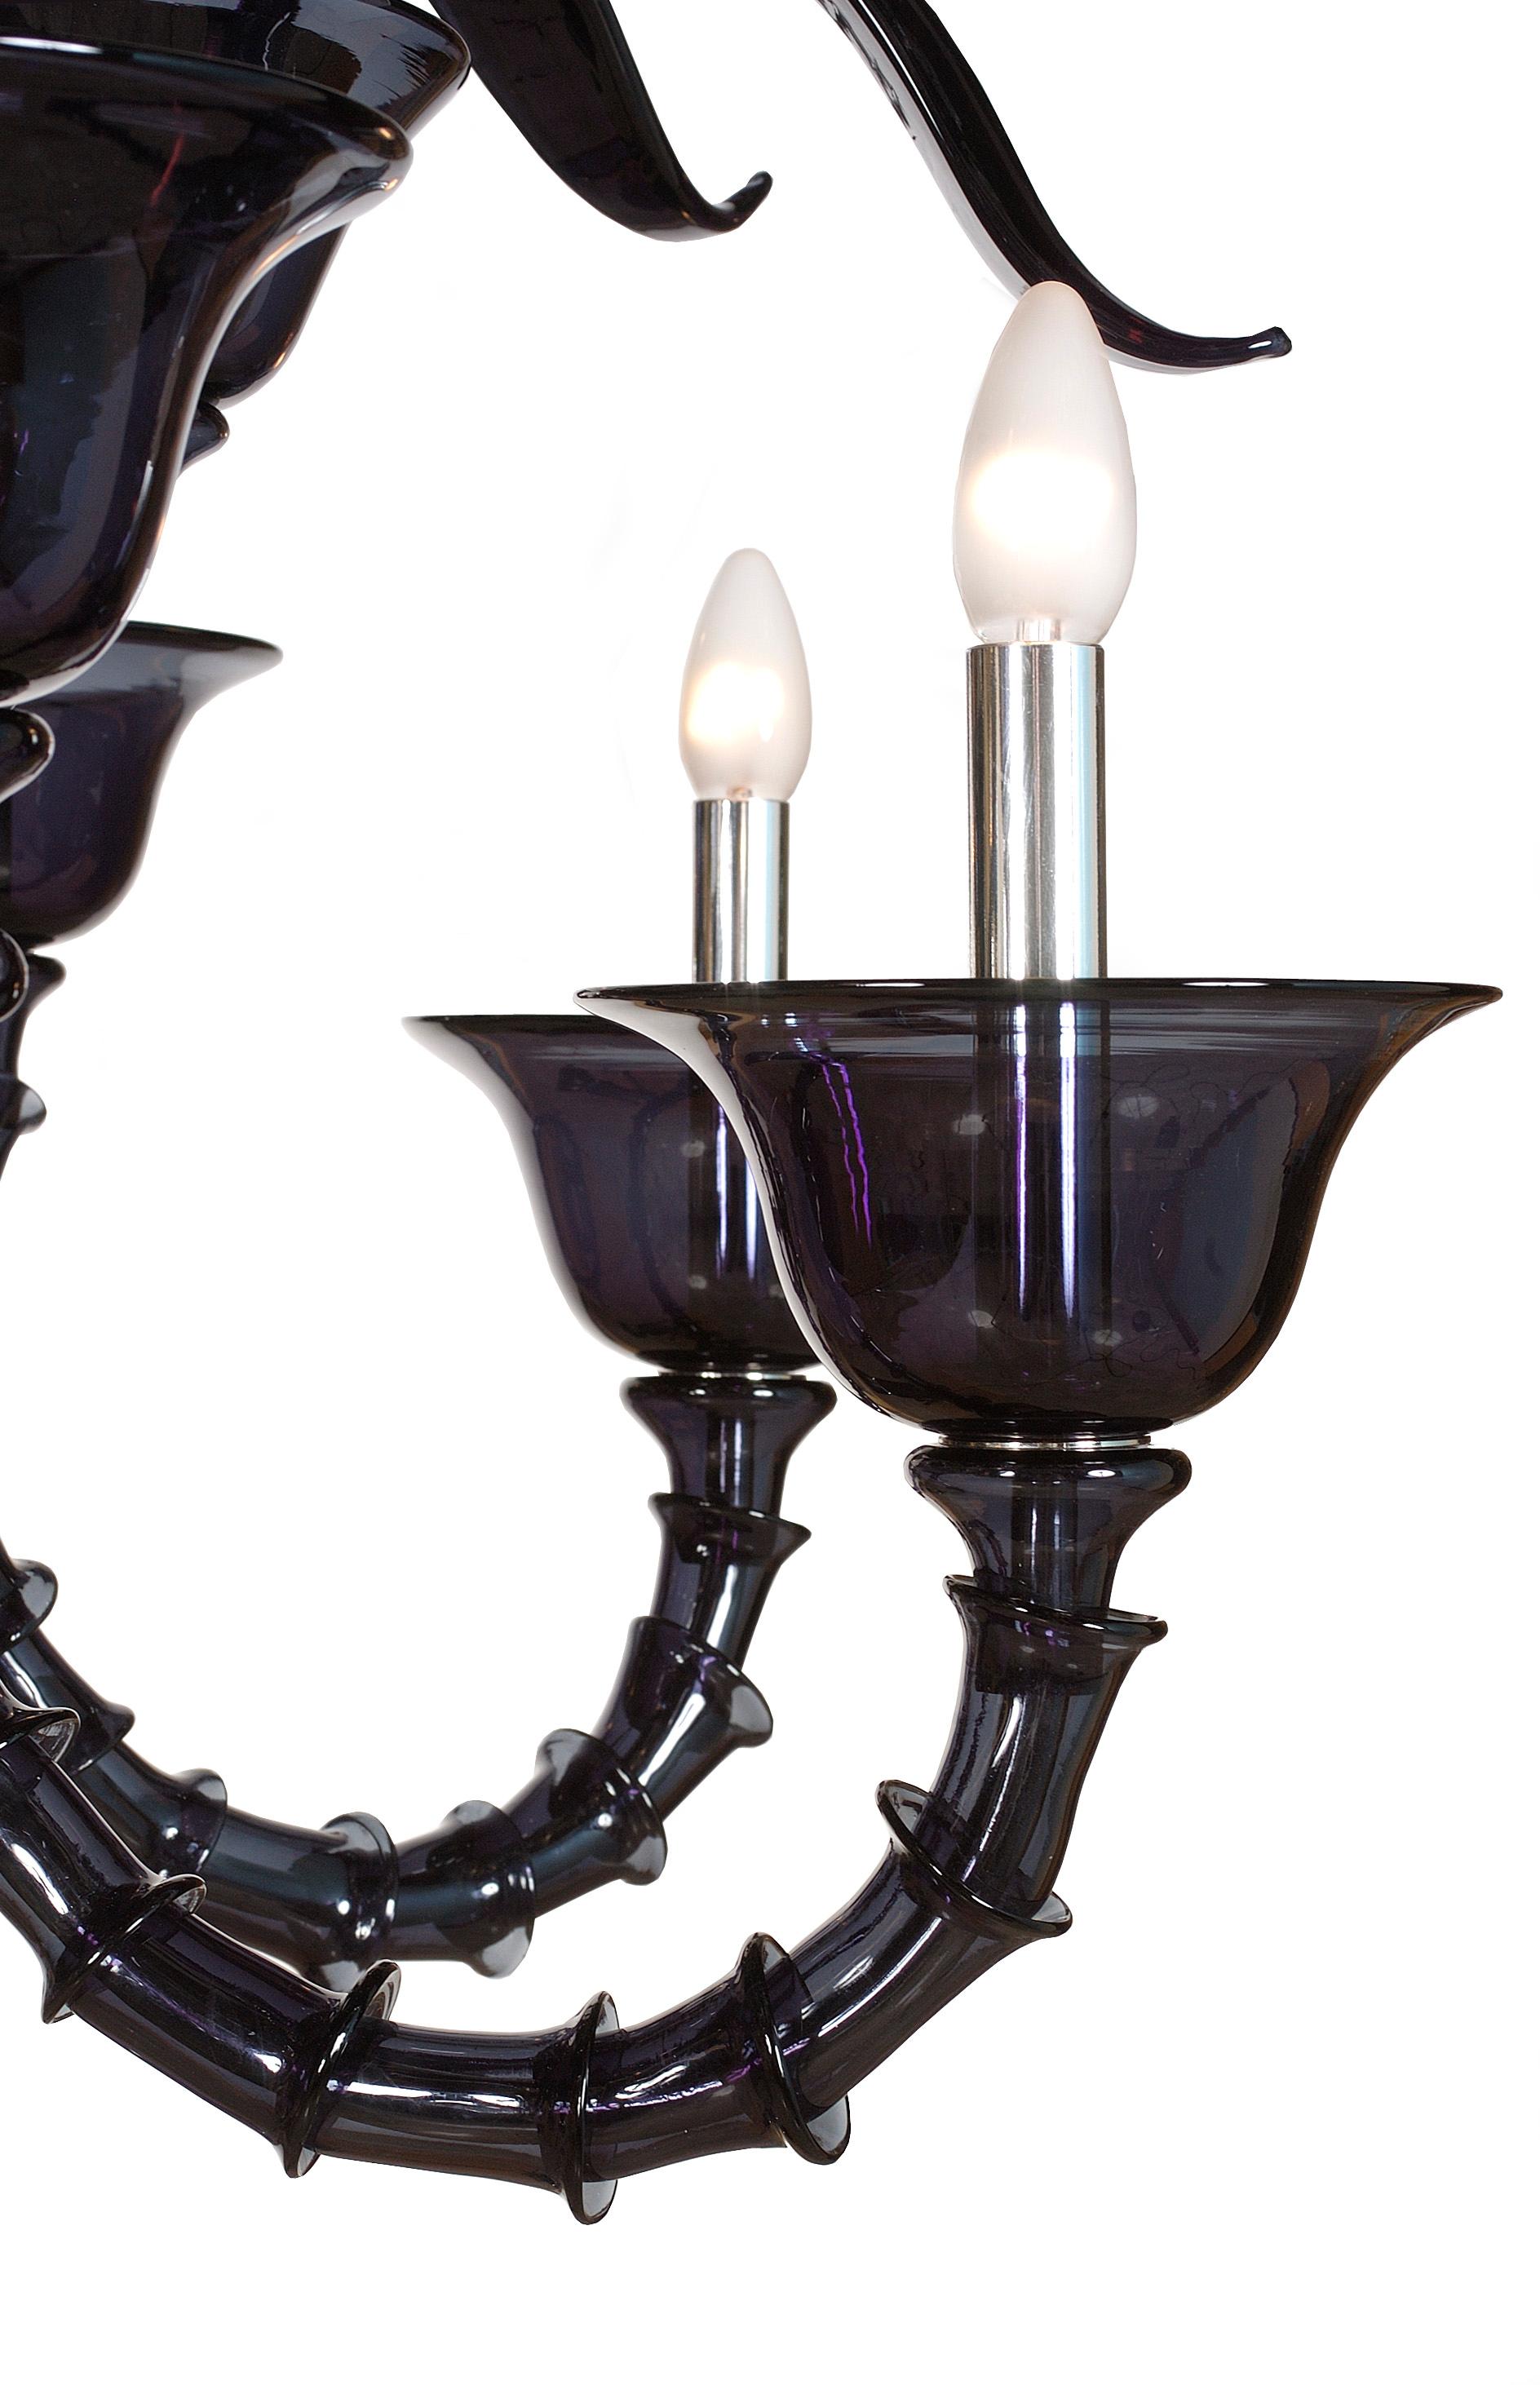 Modern Artistic Handmade Design Ca' Rezzonico New York Murano Glass Chandelier For Sale